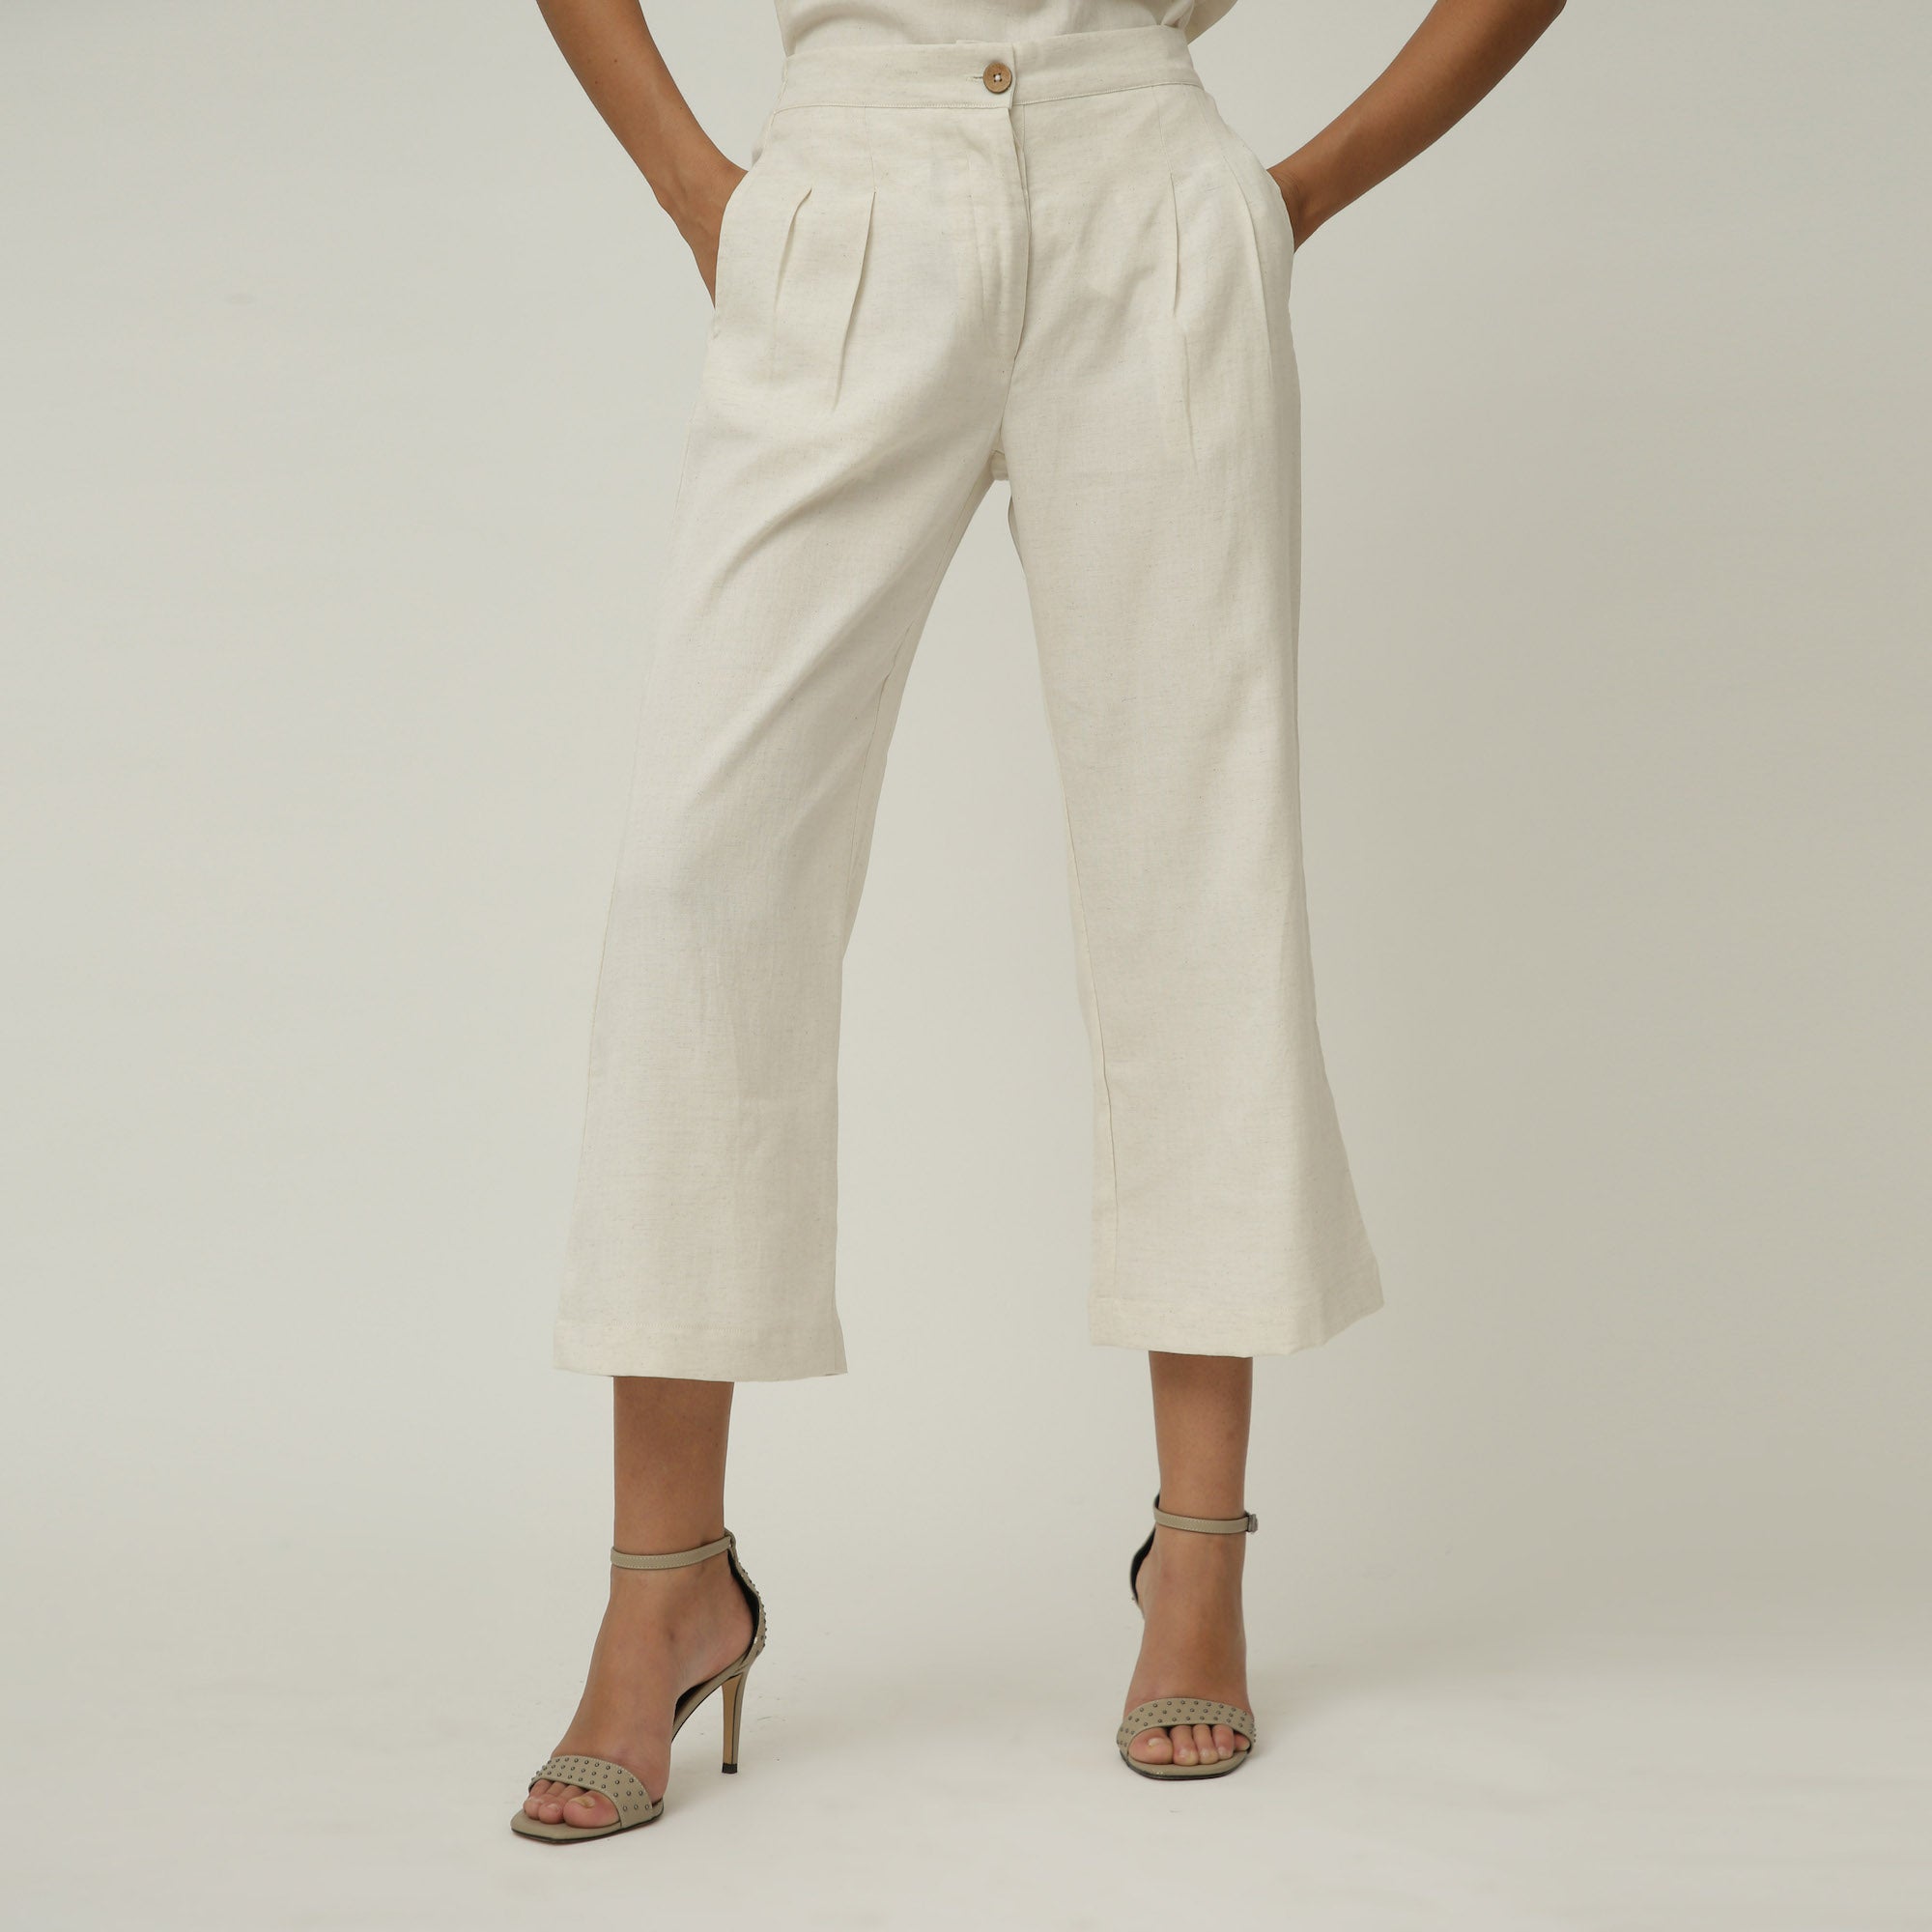 Blanche Set of 3 - Shirt, Slip Top & Pants - Ecru